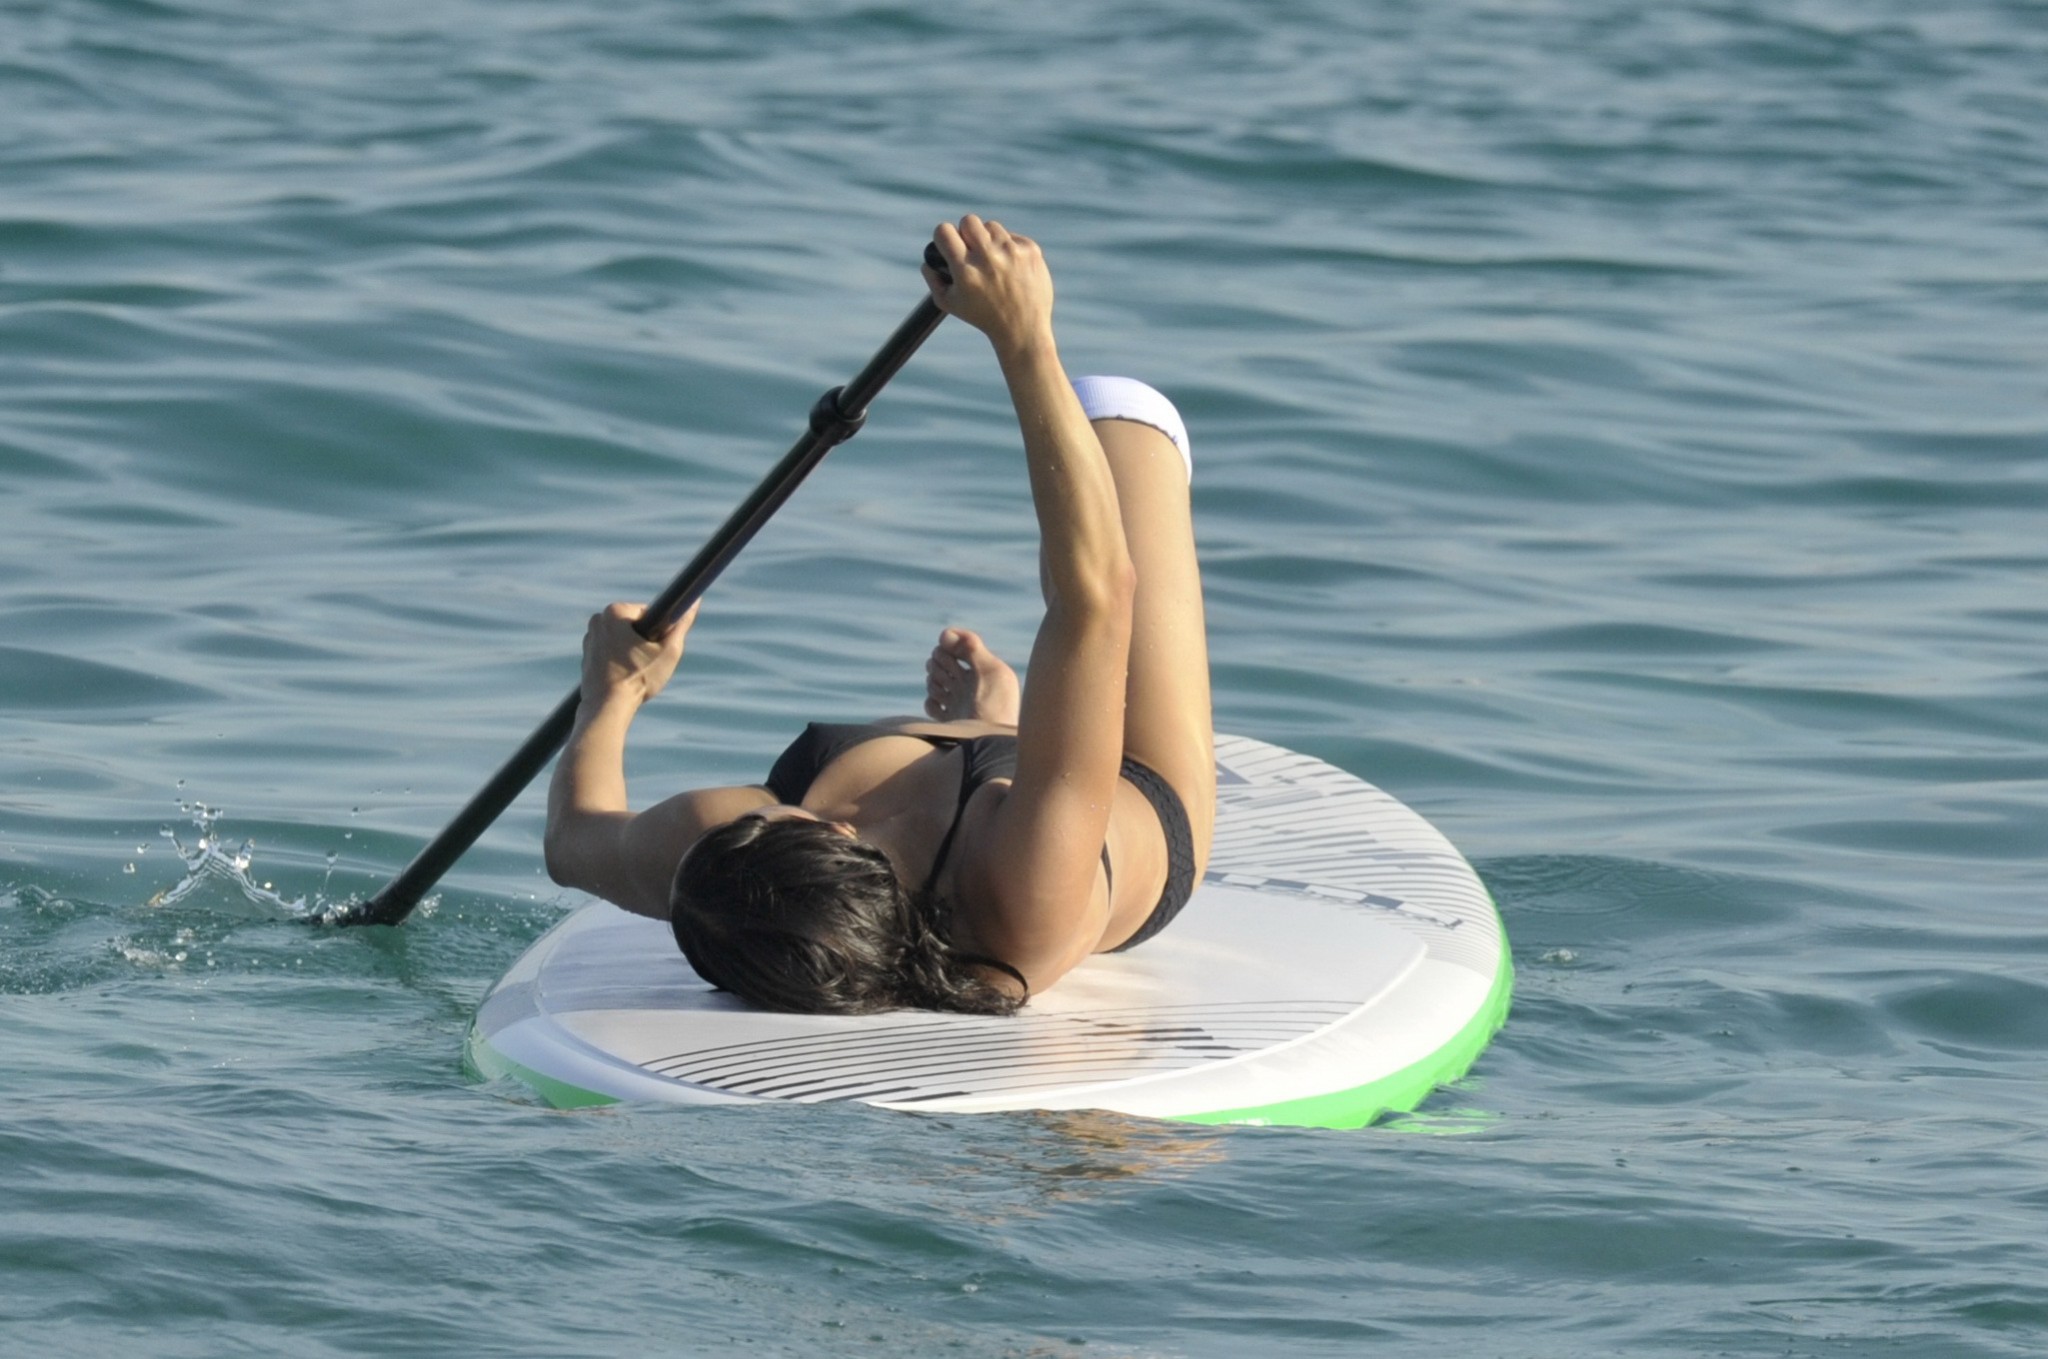 Michelle Rodriguez paddling in skimpy black bikini